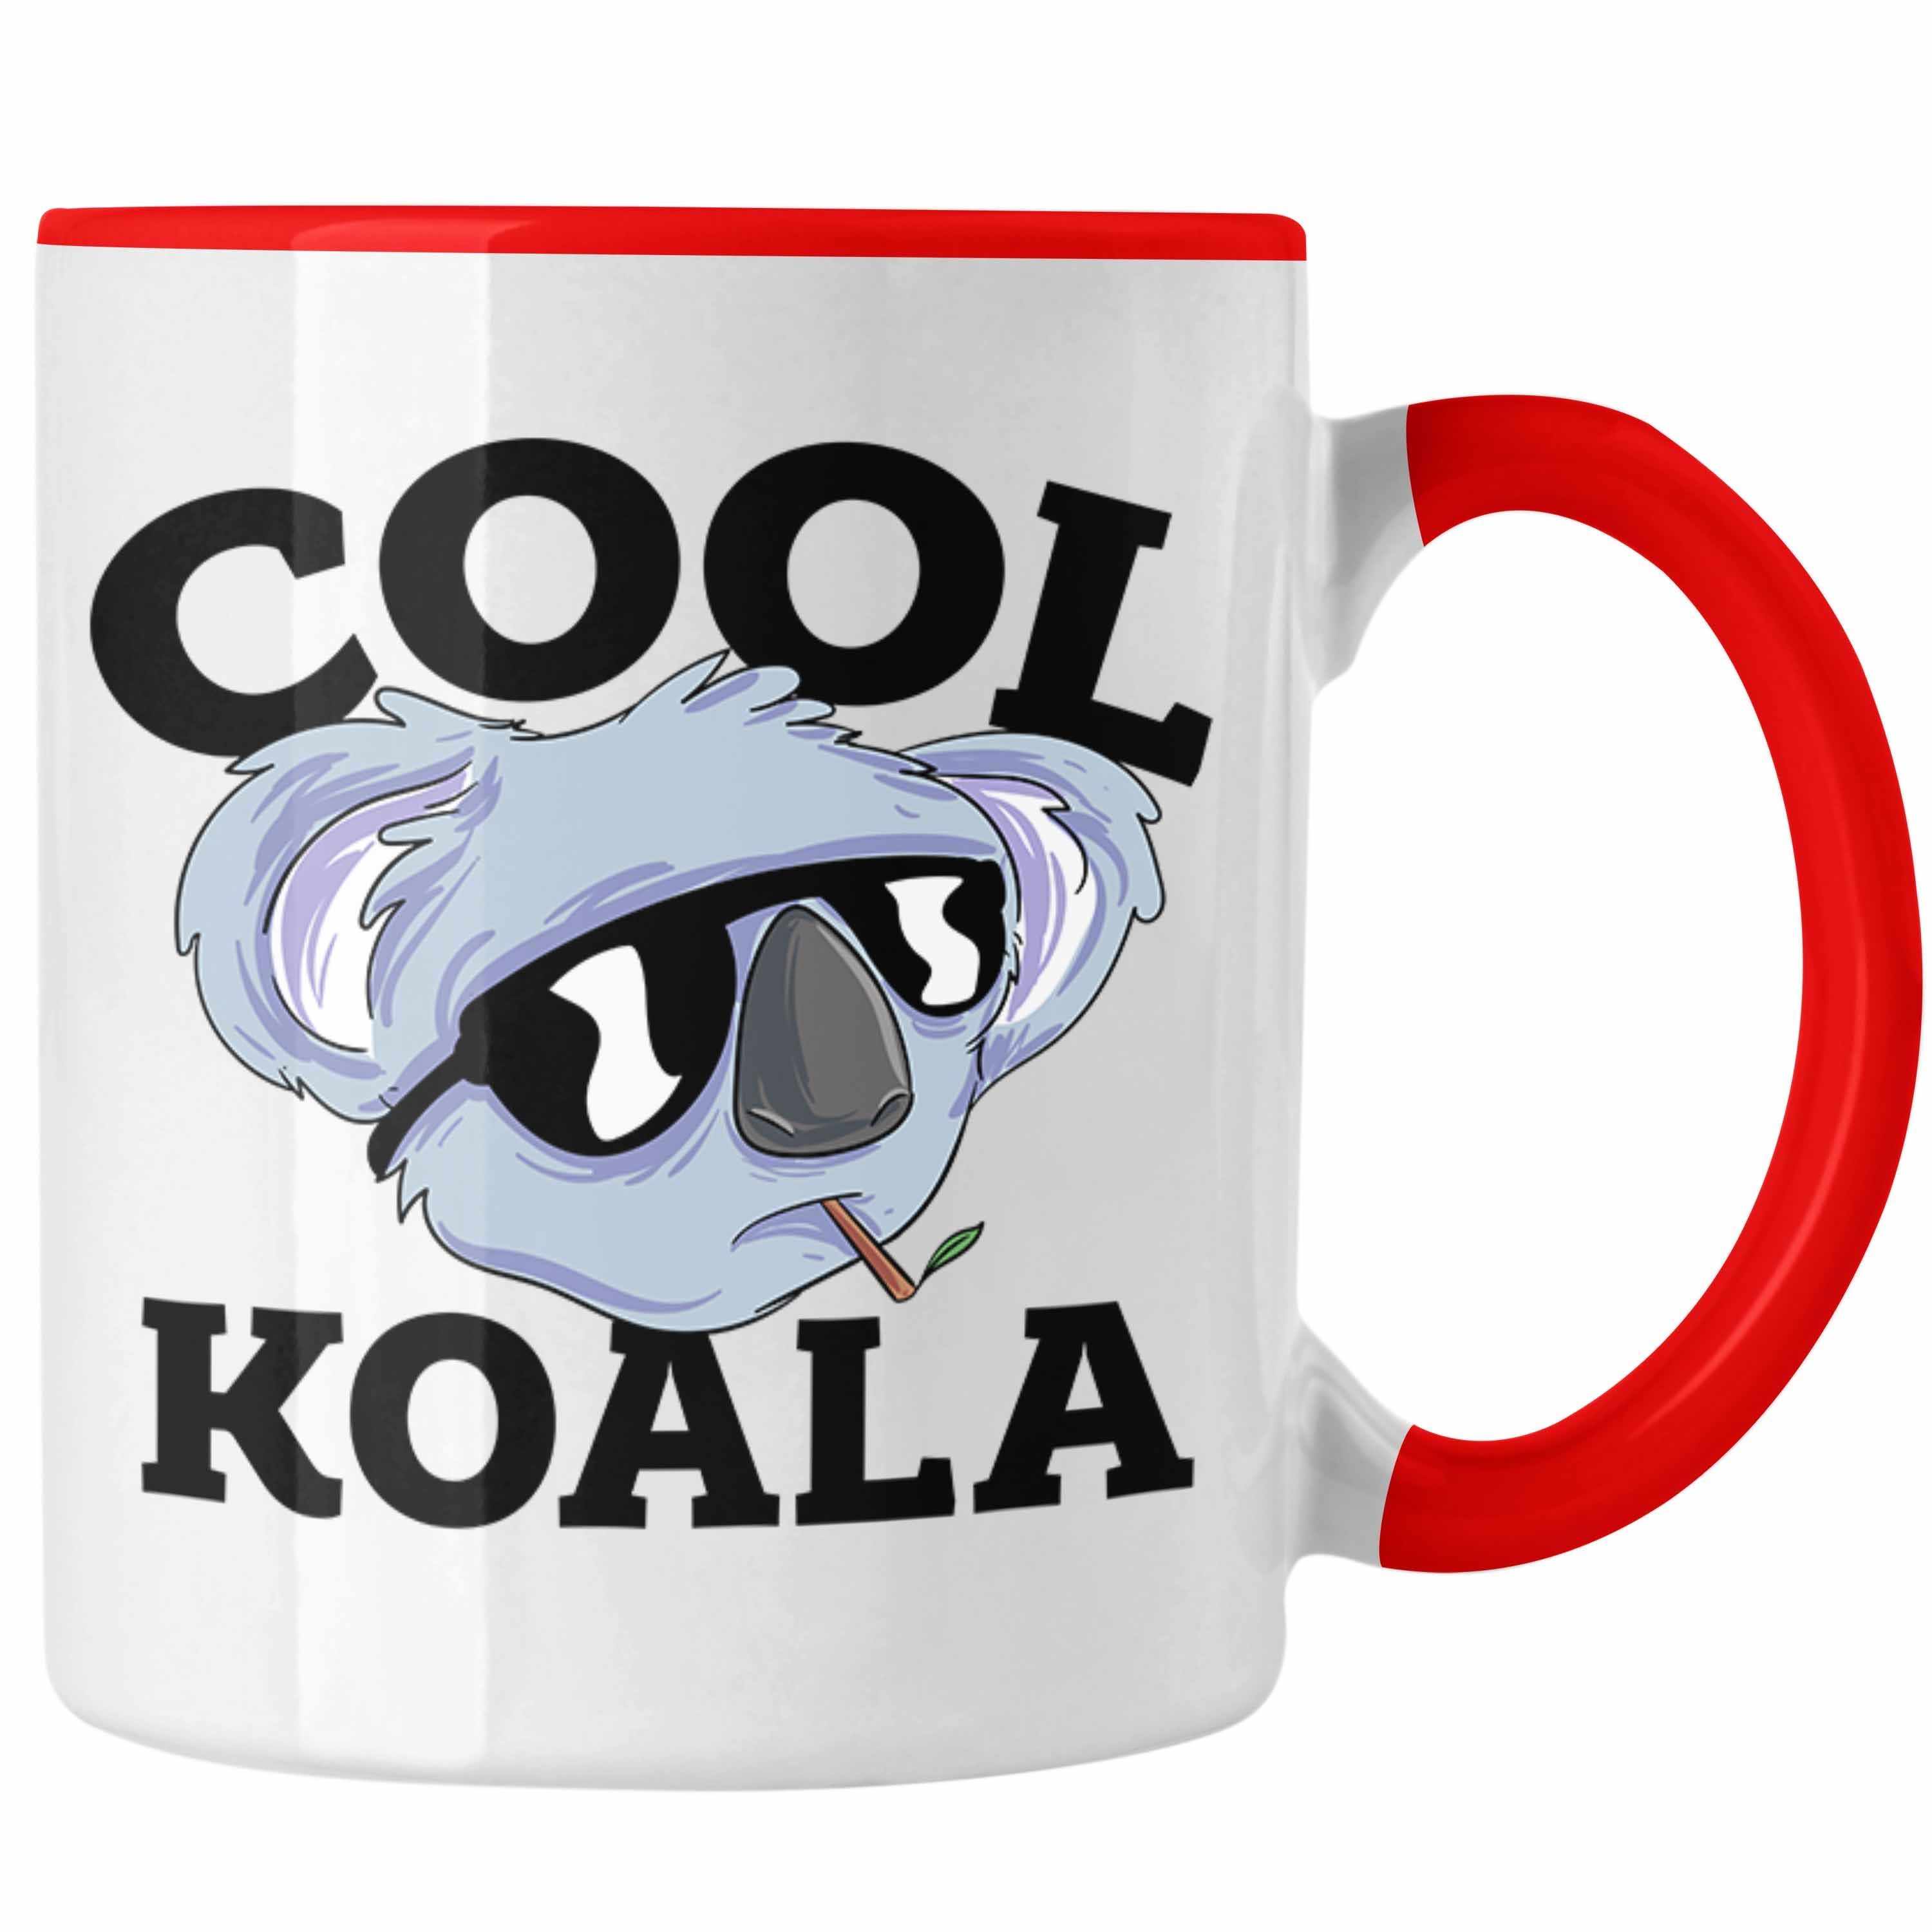 Trendation Tasse Tasse Koala Geschenkidee für Koala-Liebhaber Tasse Koala-Aufdruck Rot